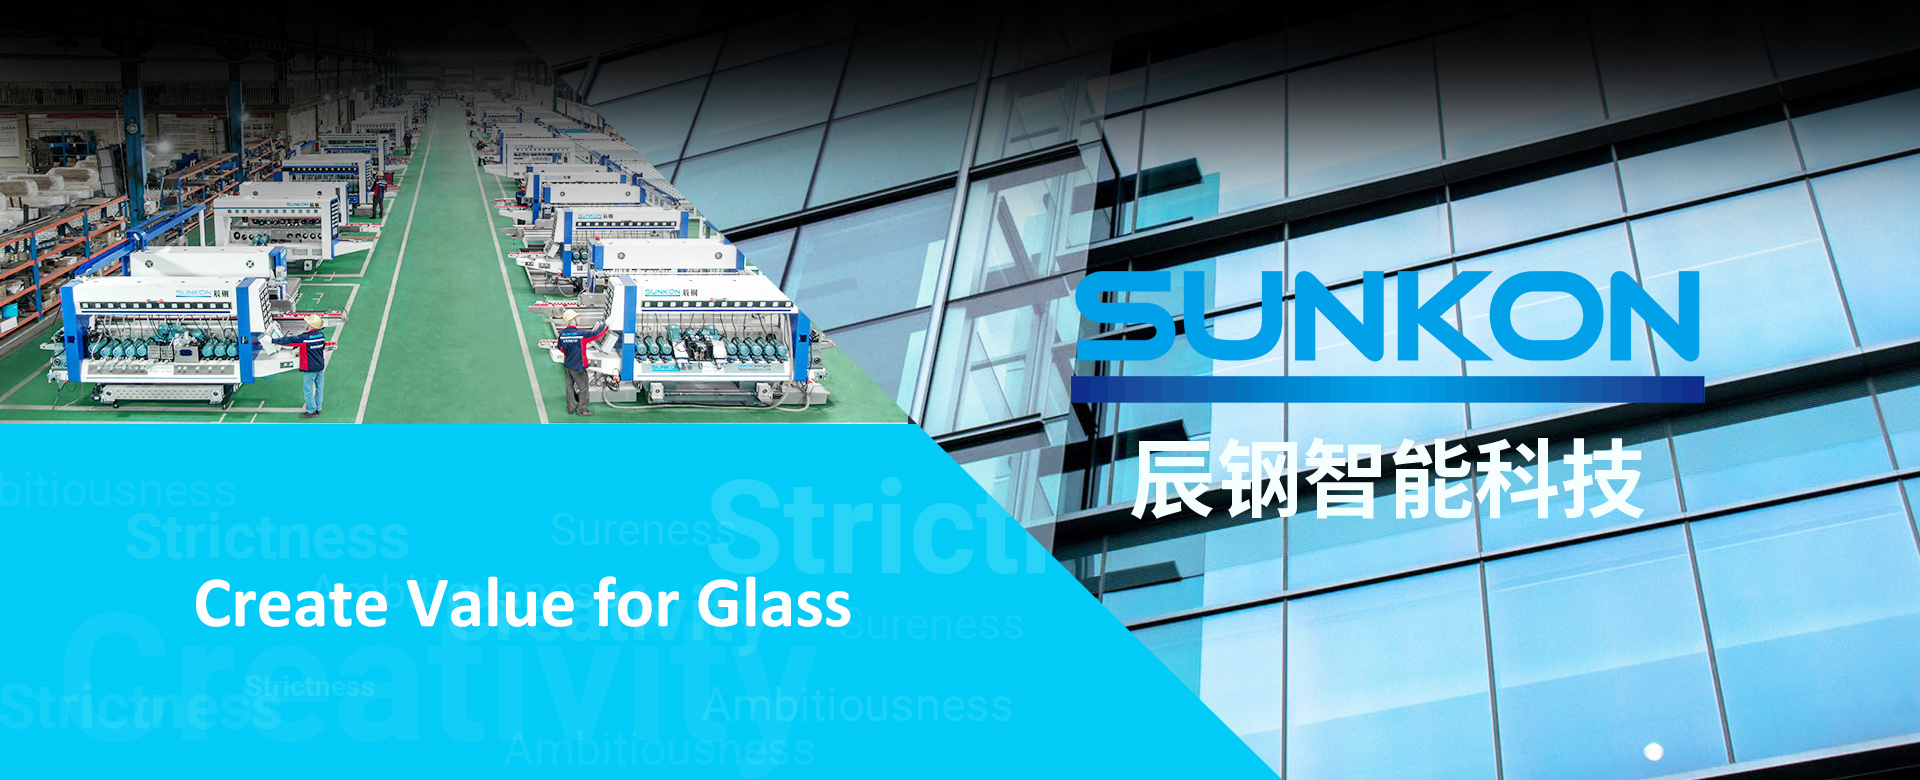 SUNKON üveggép - banner